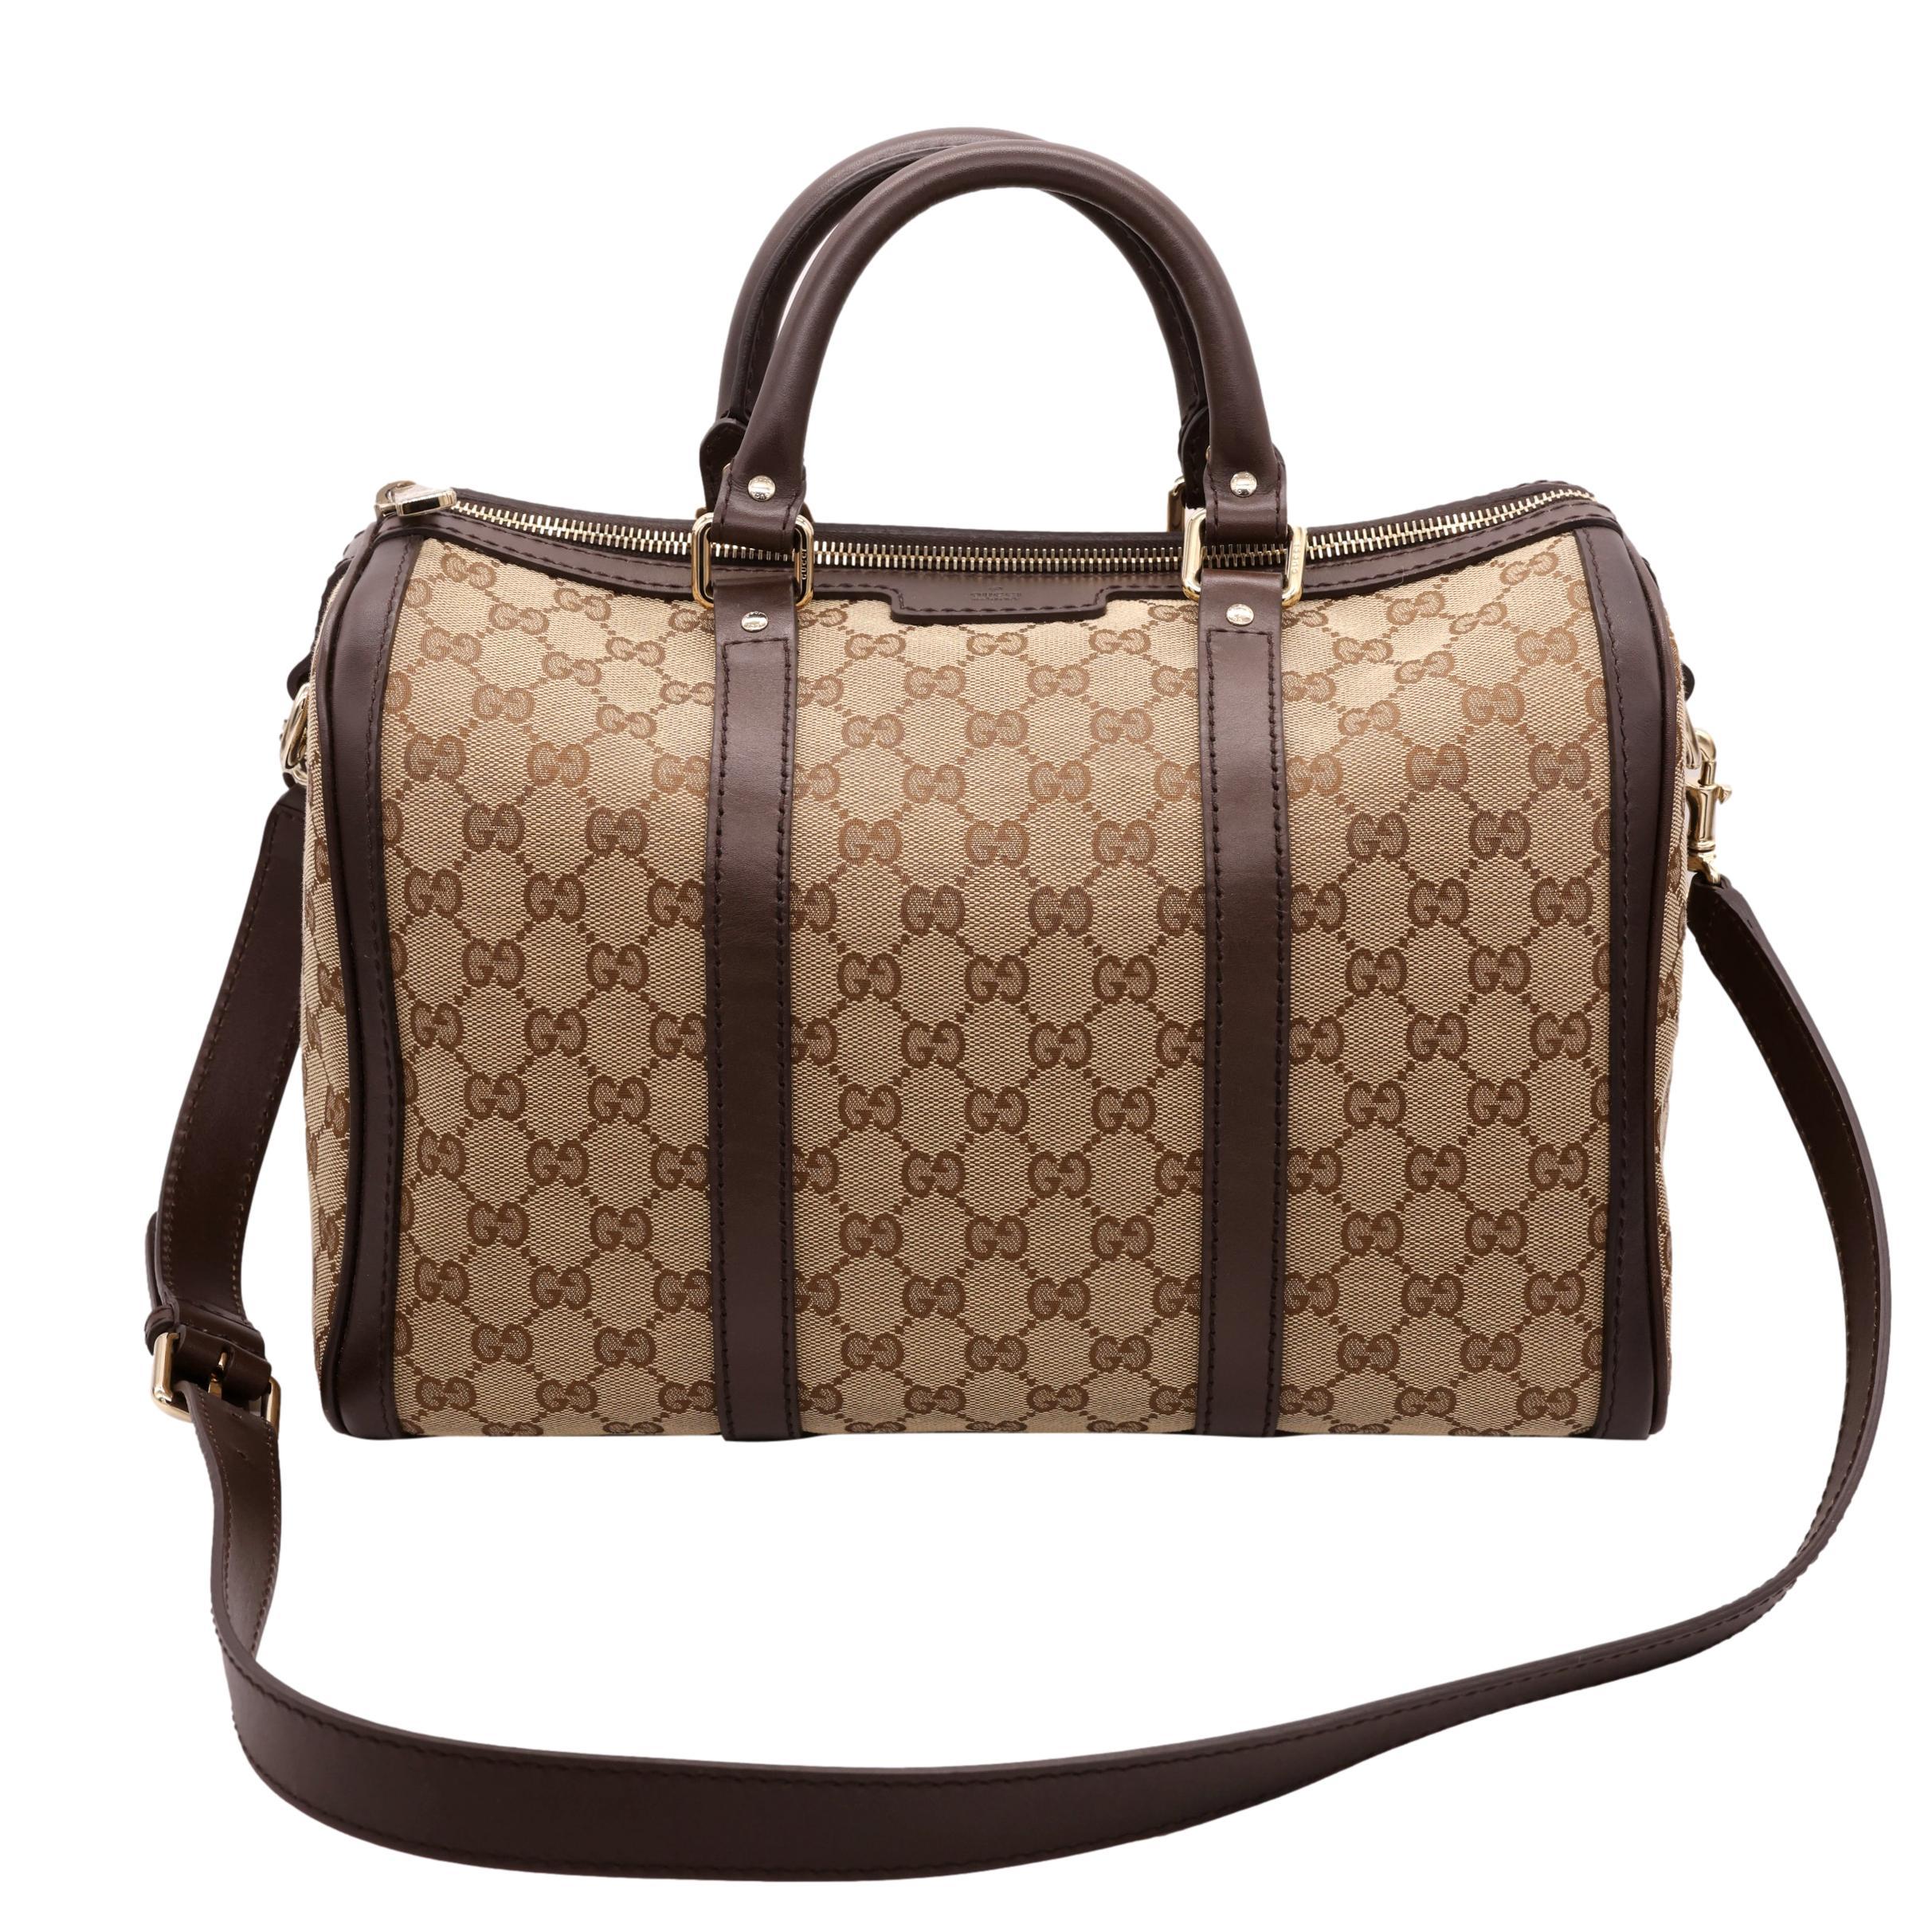 Gucci GG Monogram Supreme Canvas Brown Boston Top Handle Crossbody Bag, 2020. This classic Gucci 